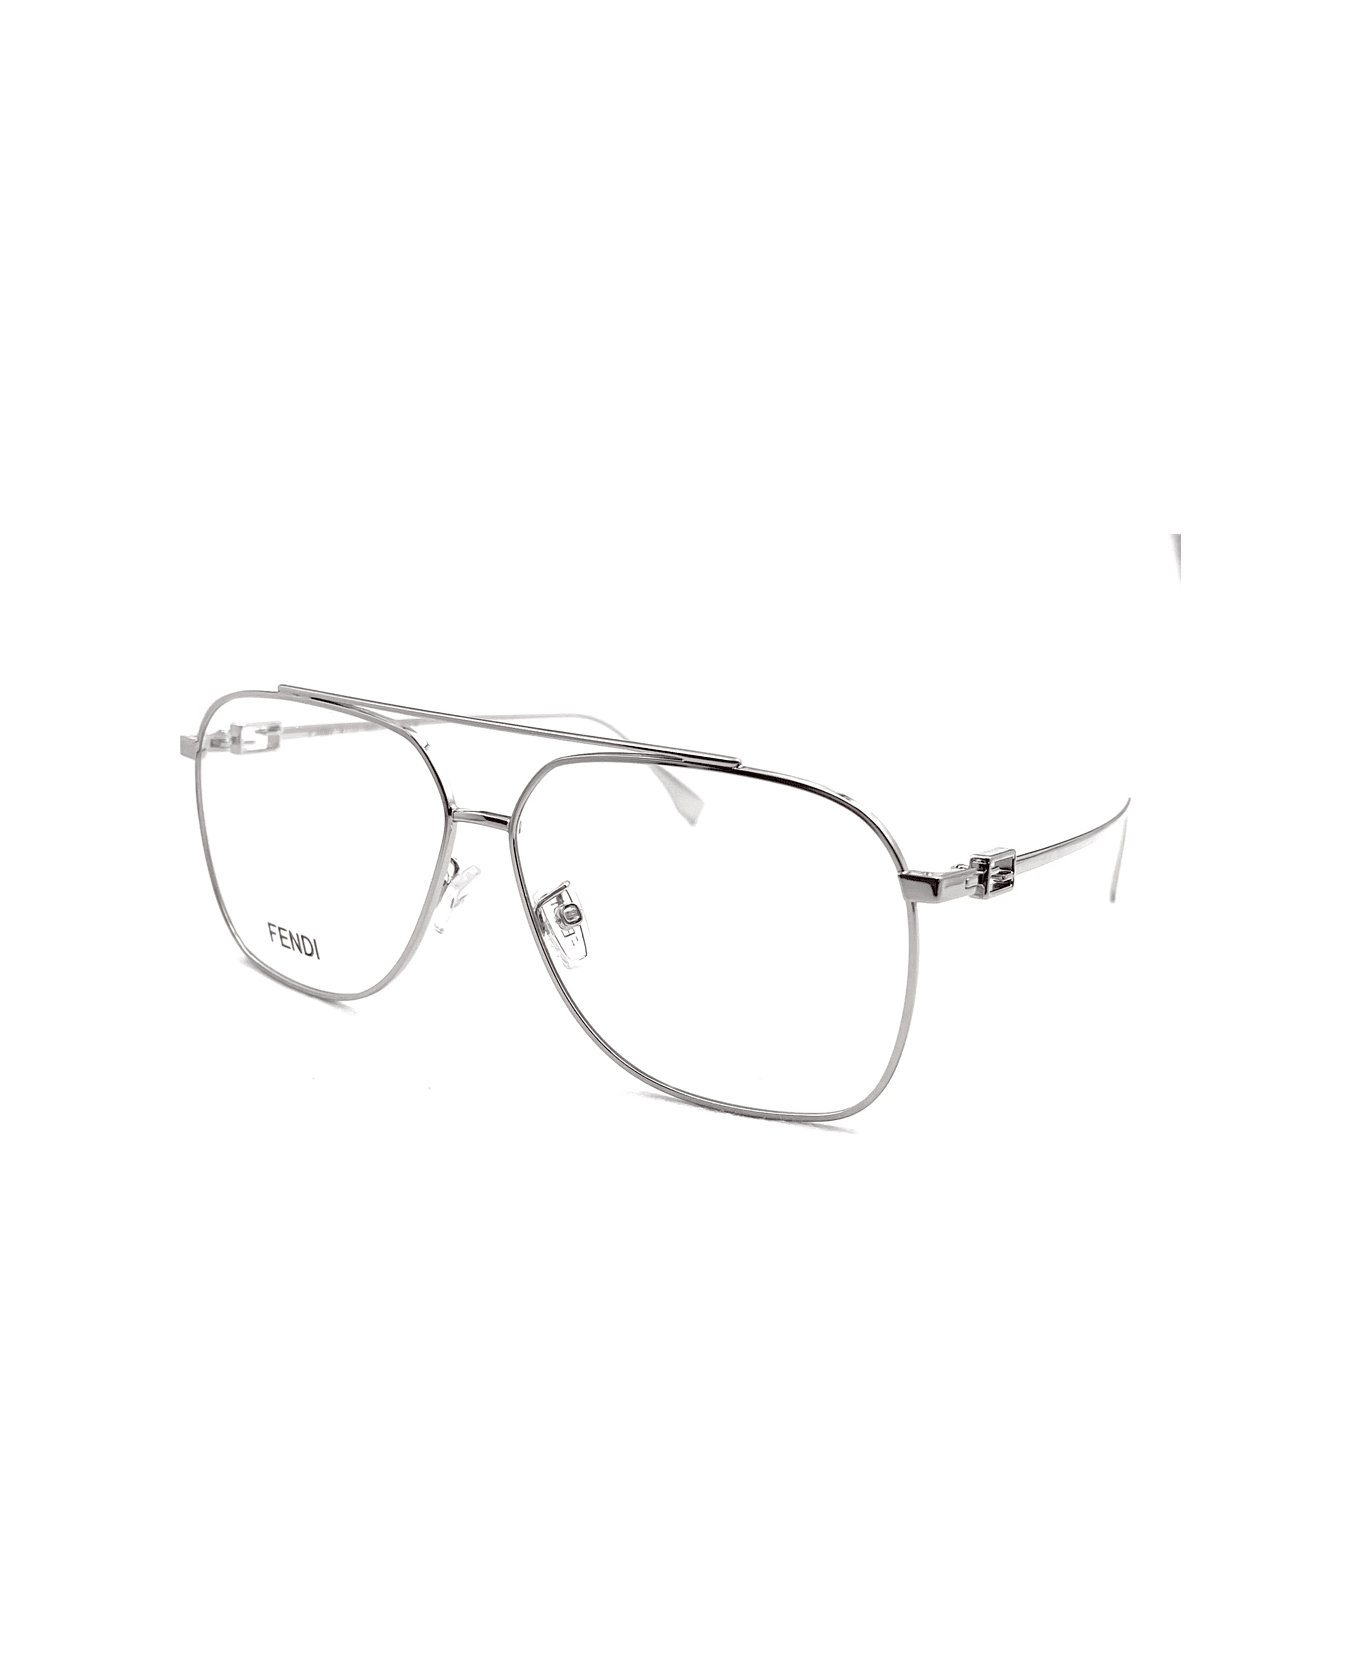 Fendi Eyewear Fe50083u 016 Glasses